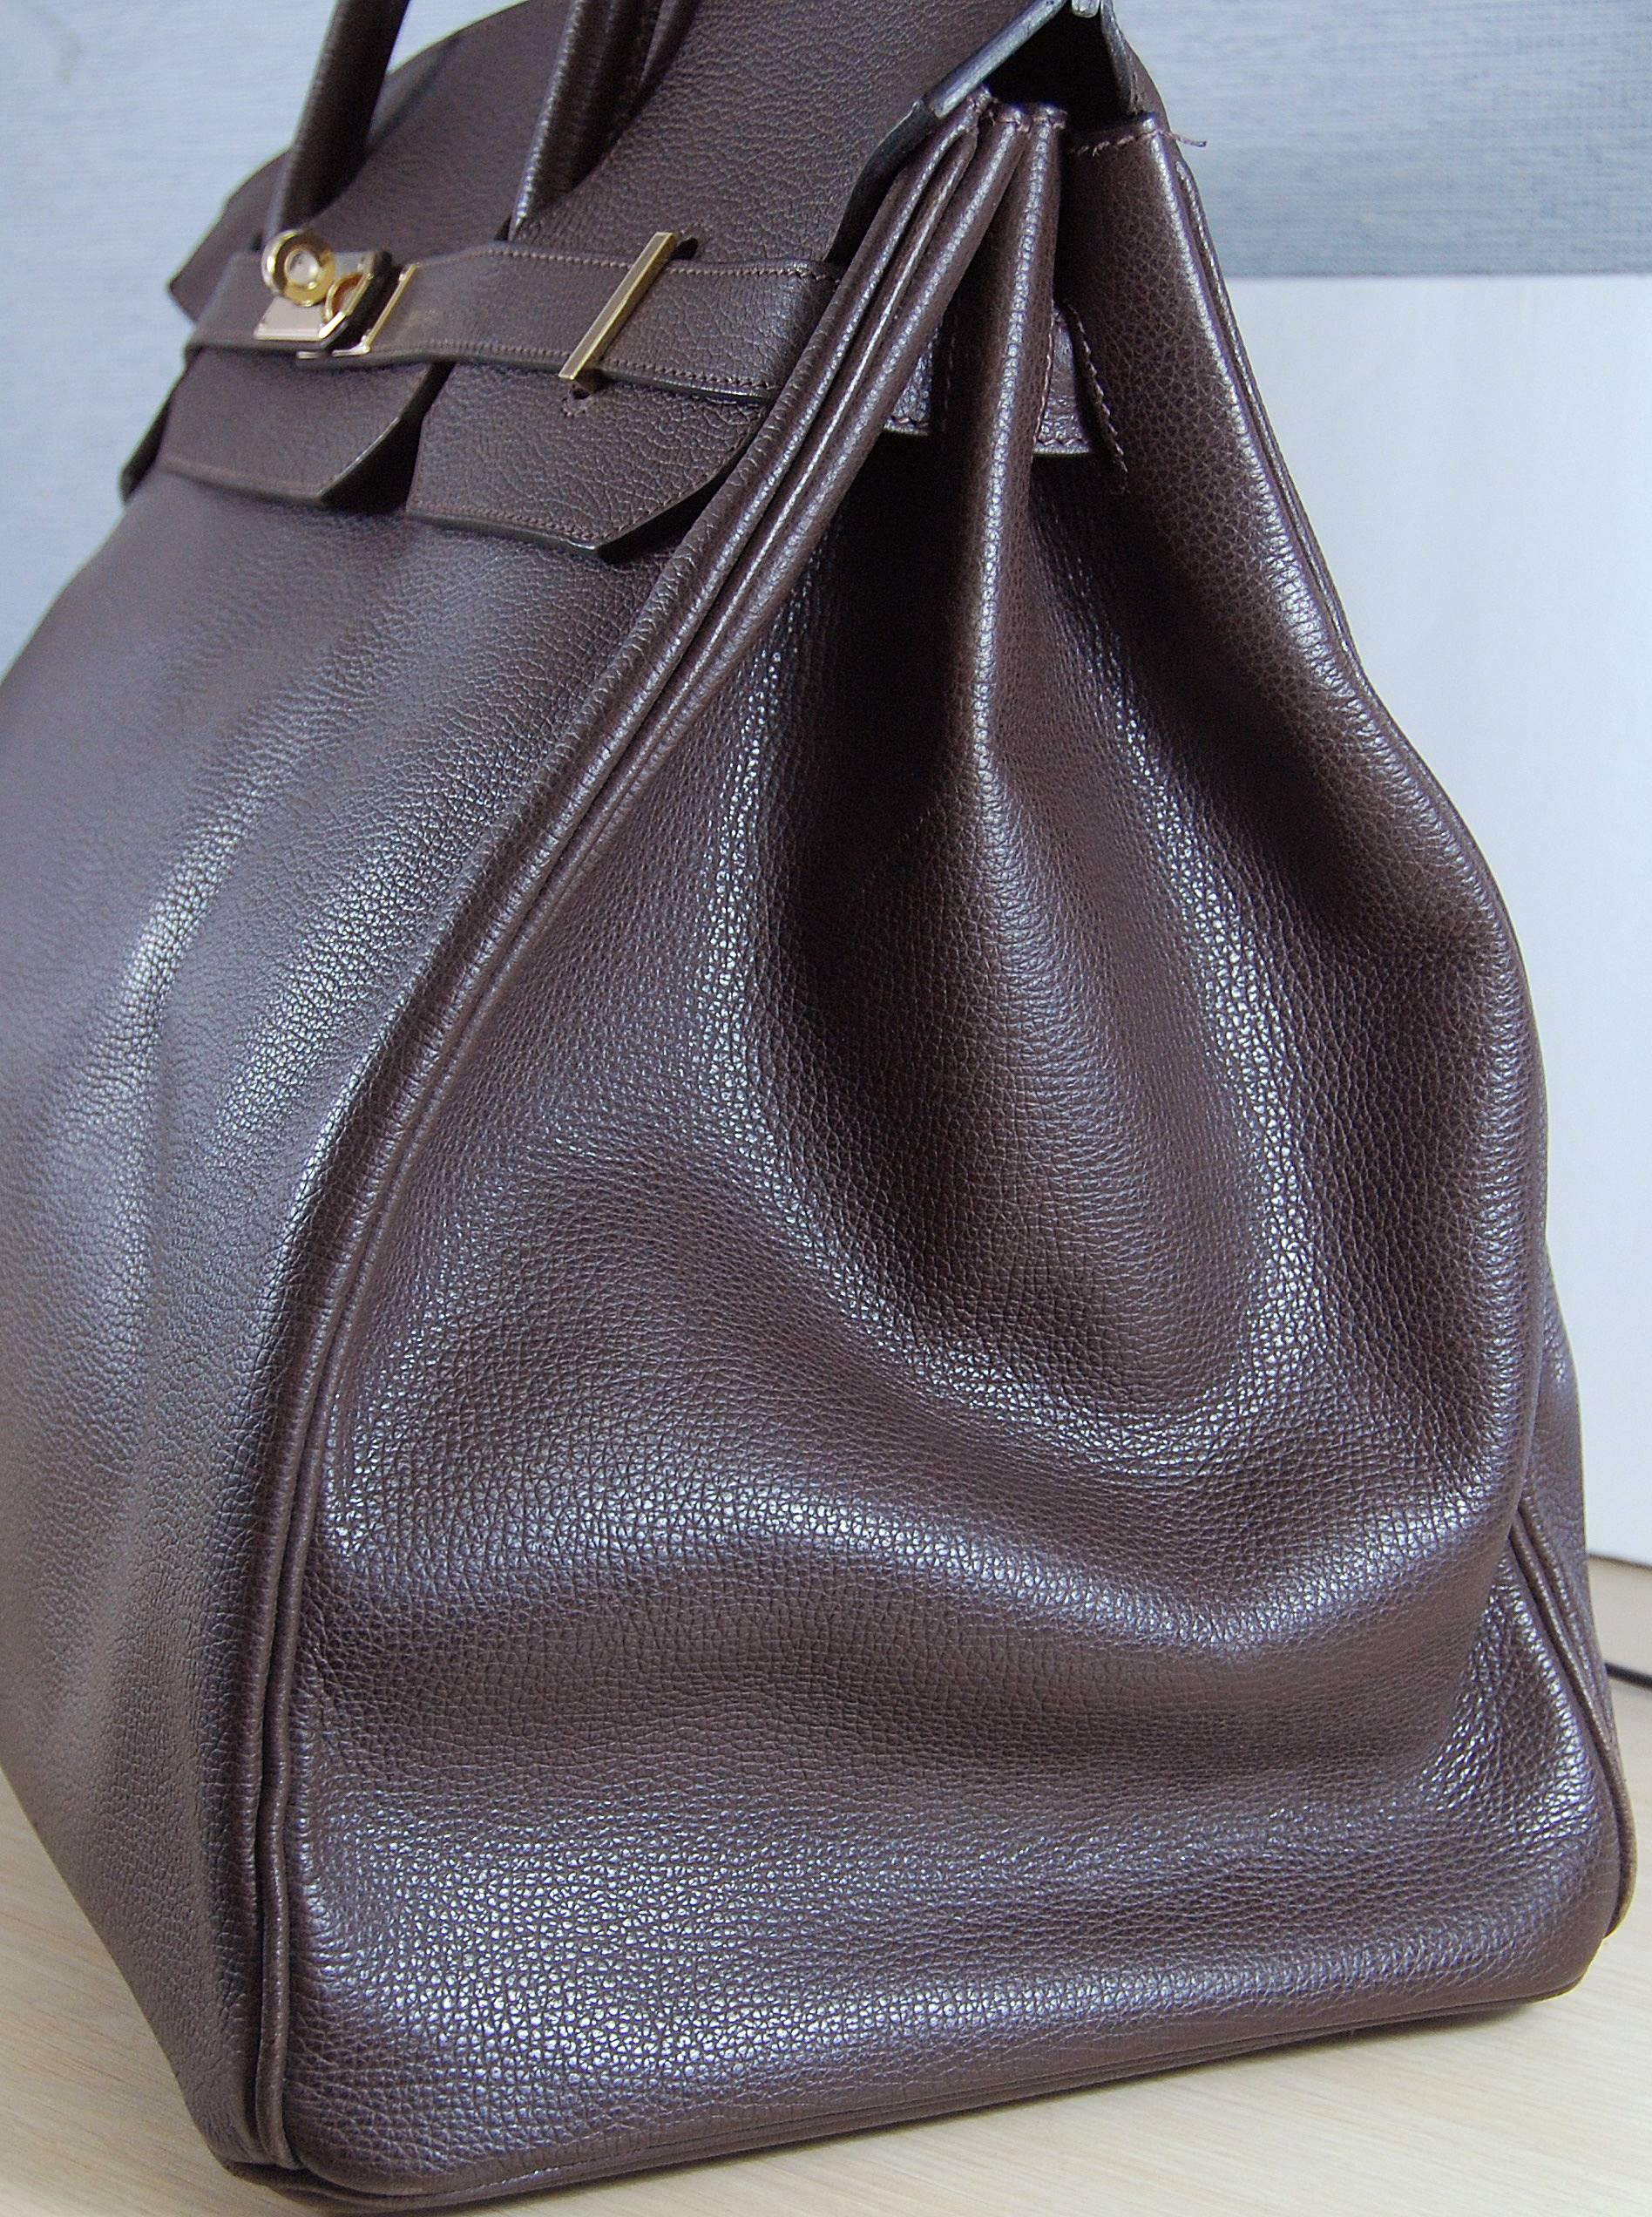 HERMES 50cm Brown Birkin Travel Bag with Gold Hardware
100% Authentic Hermes Birkin Bag
COLOR: Brown
MATERIAL: Leather
HARDWARE: Gold
ORIGIN: France
CONDITION: Excellent/Pristine